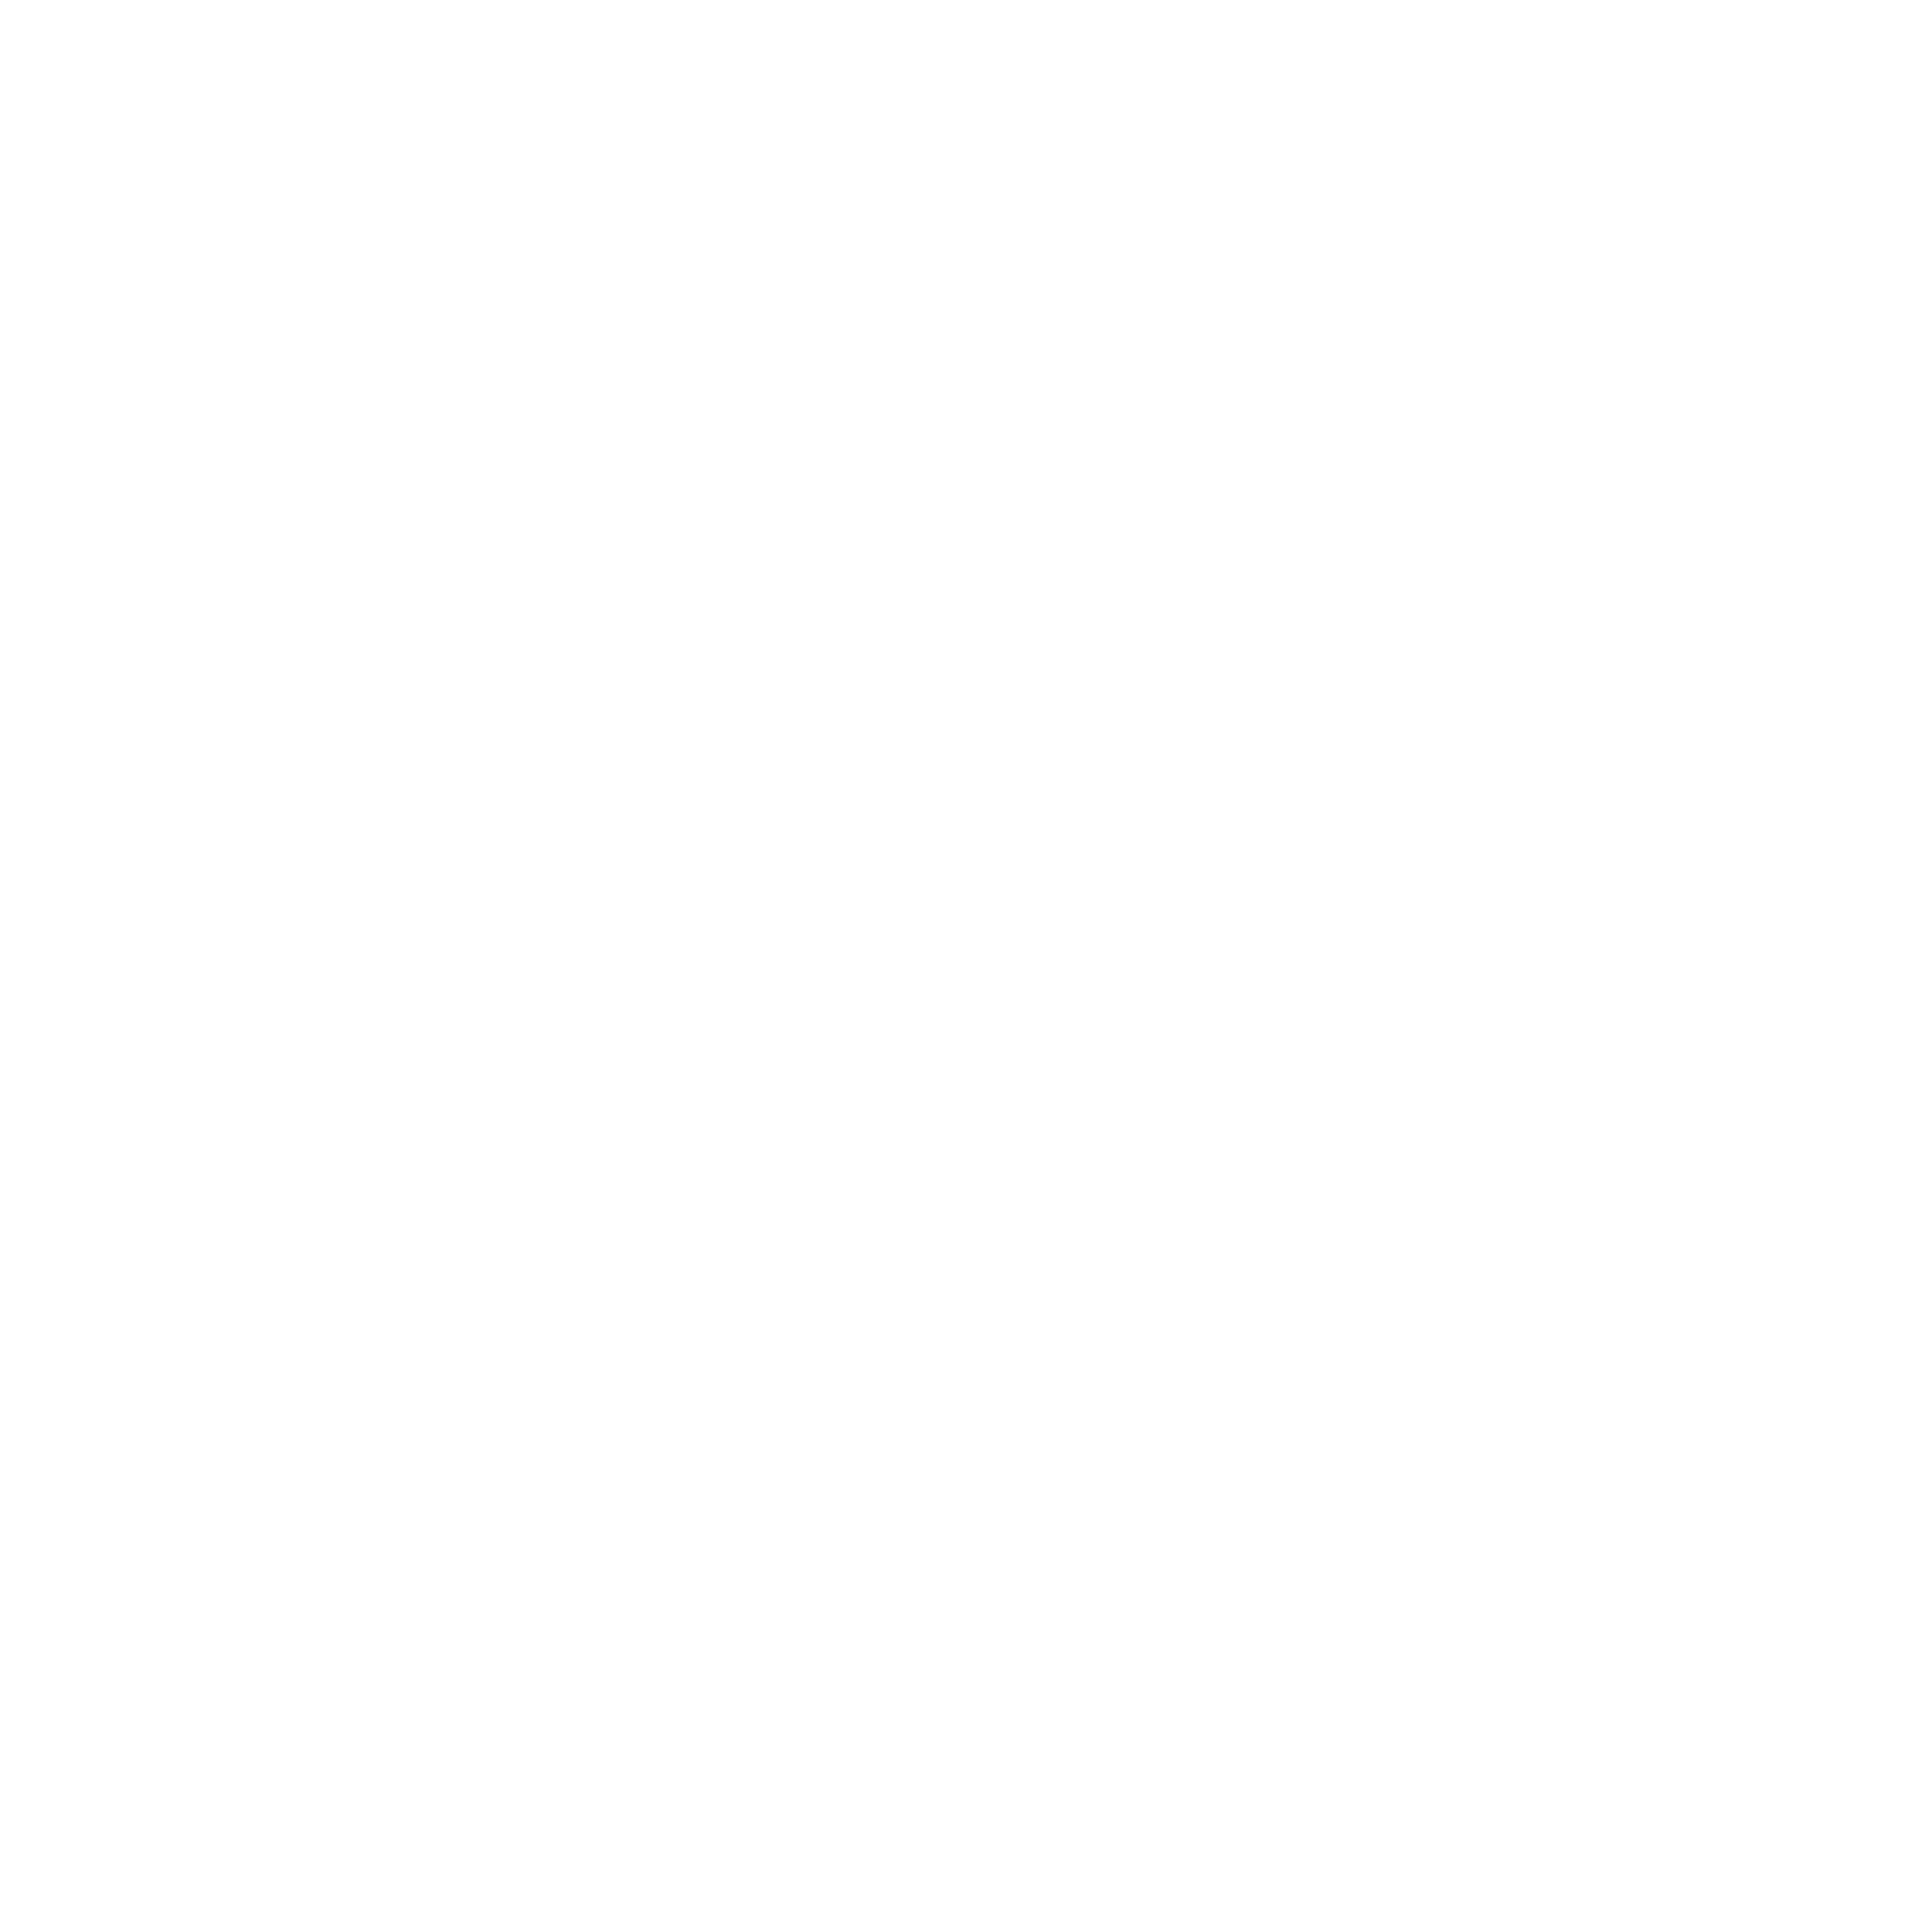 Light Tower Films